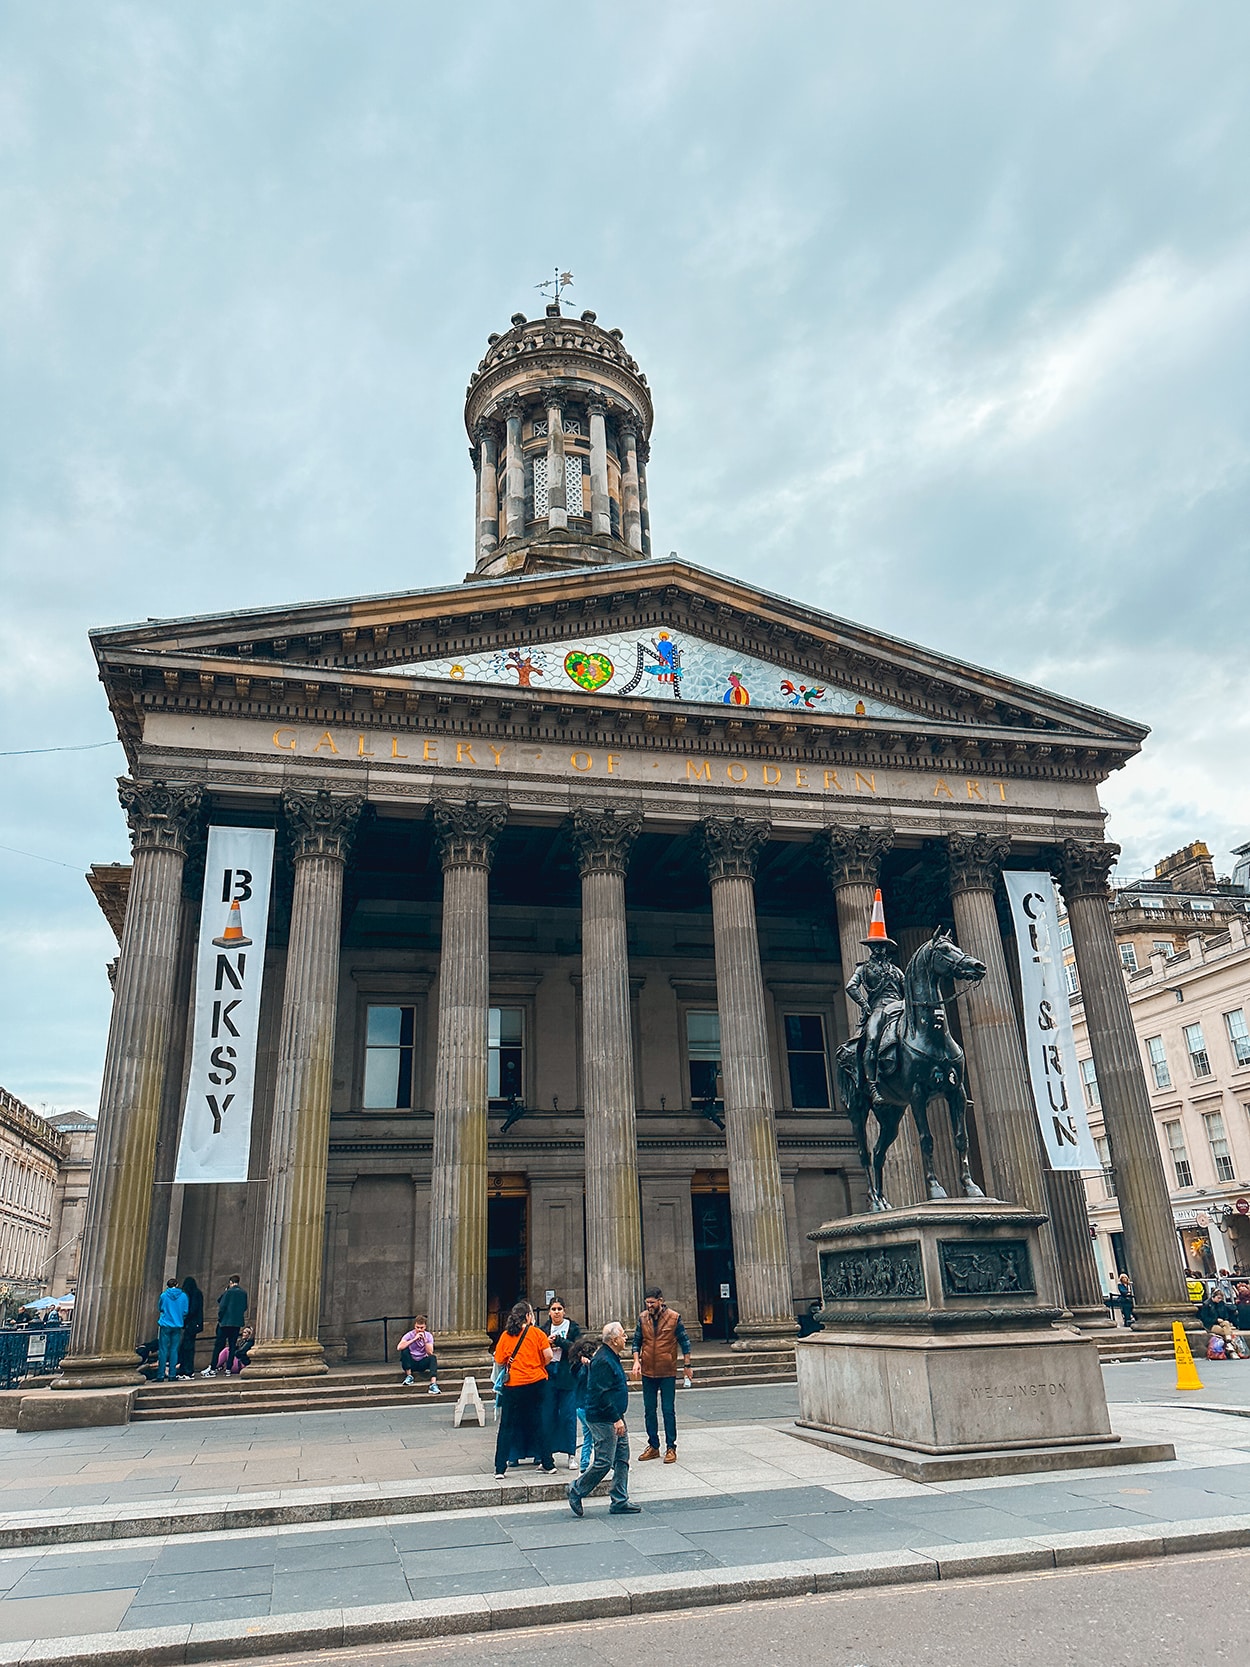 Gallery of Modern Art in Glasgow Scotland